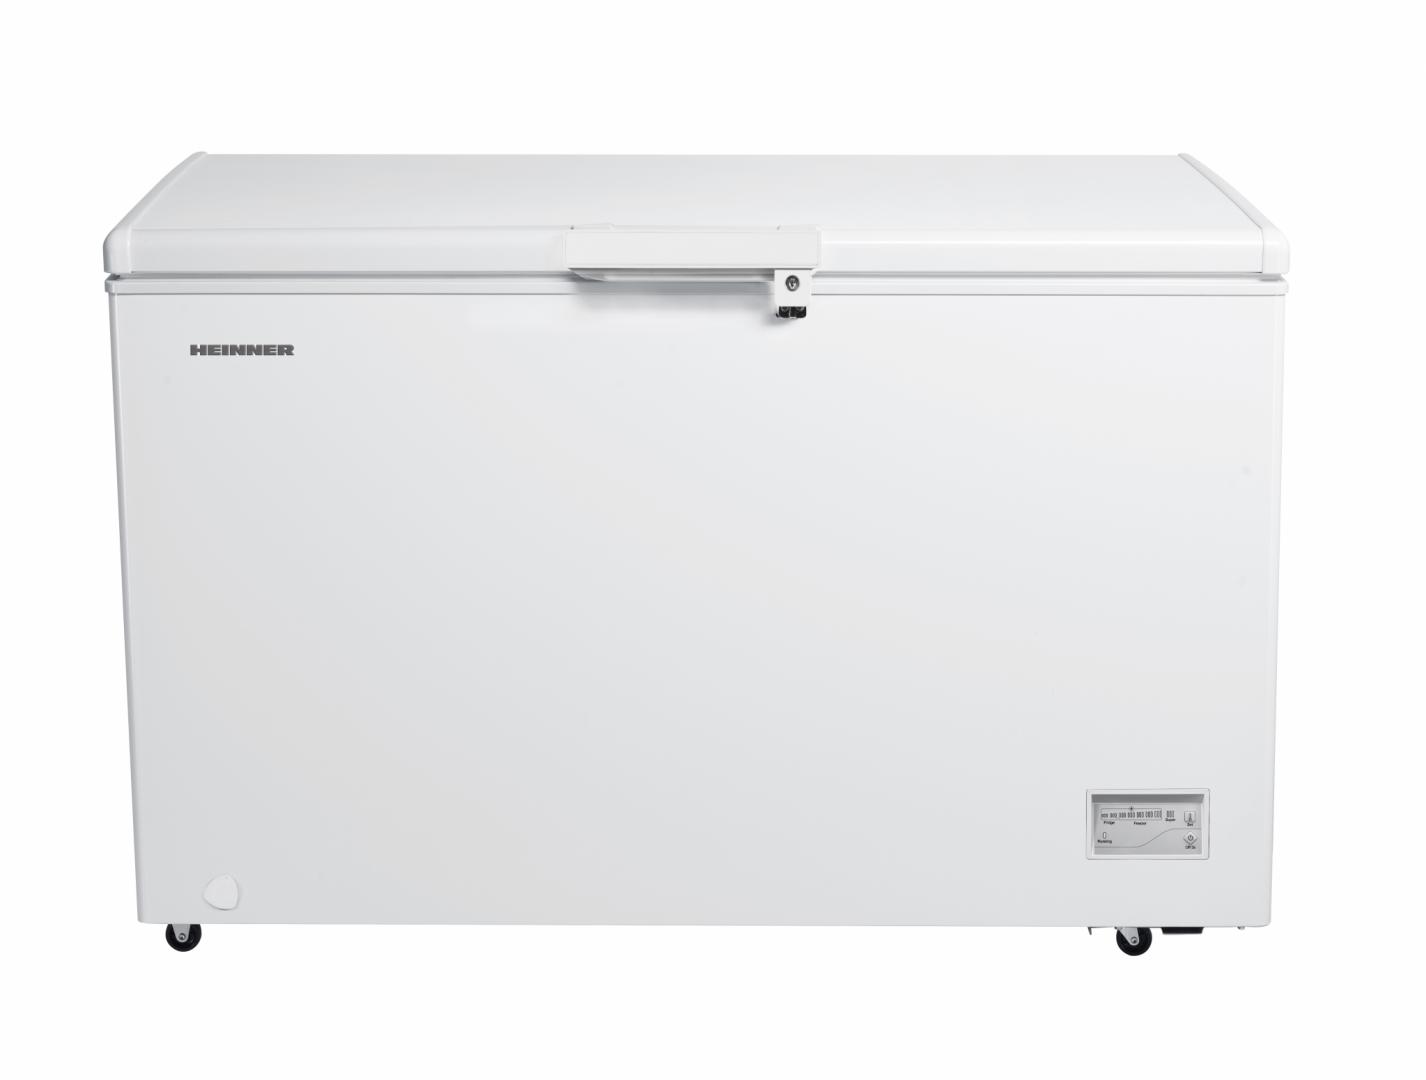 Lada frigorifica Heinner HCF-371CNHF+, Convertibila (frigider/congelator), 371L, Control electronic, Display rezistent la apa, Alb